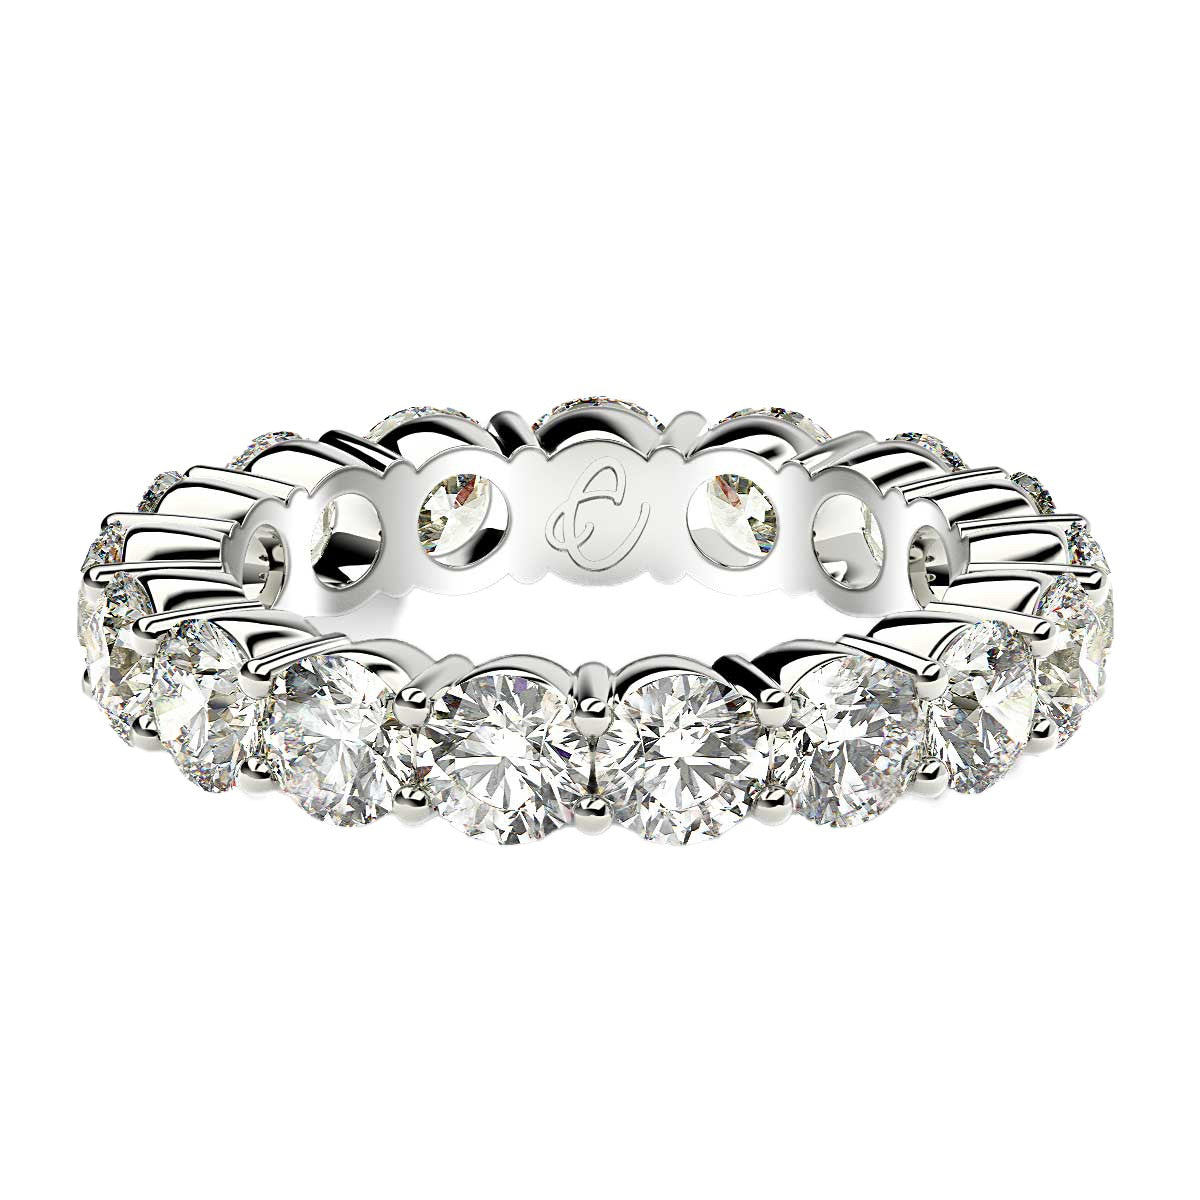 Round Cut Lab Grown Diamond Eternity Ring In 14K White Gold 3 Cttw Fg Vs2 72995-2